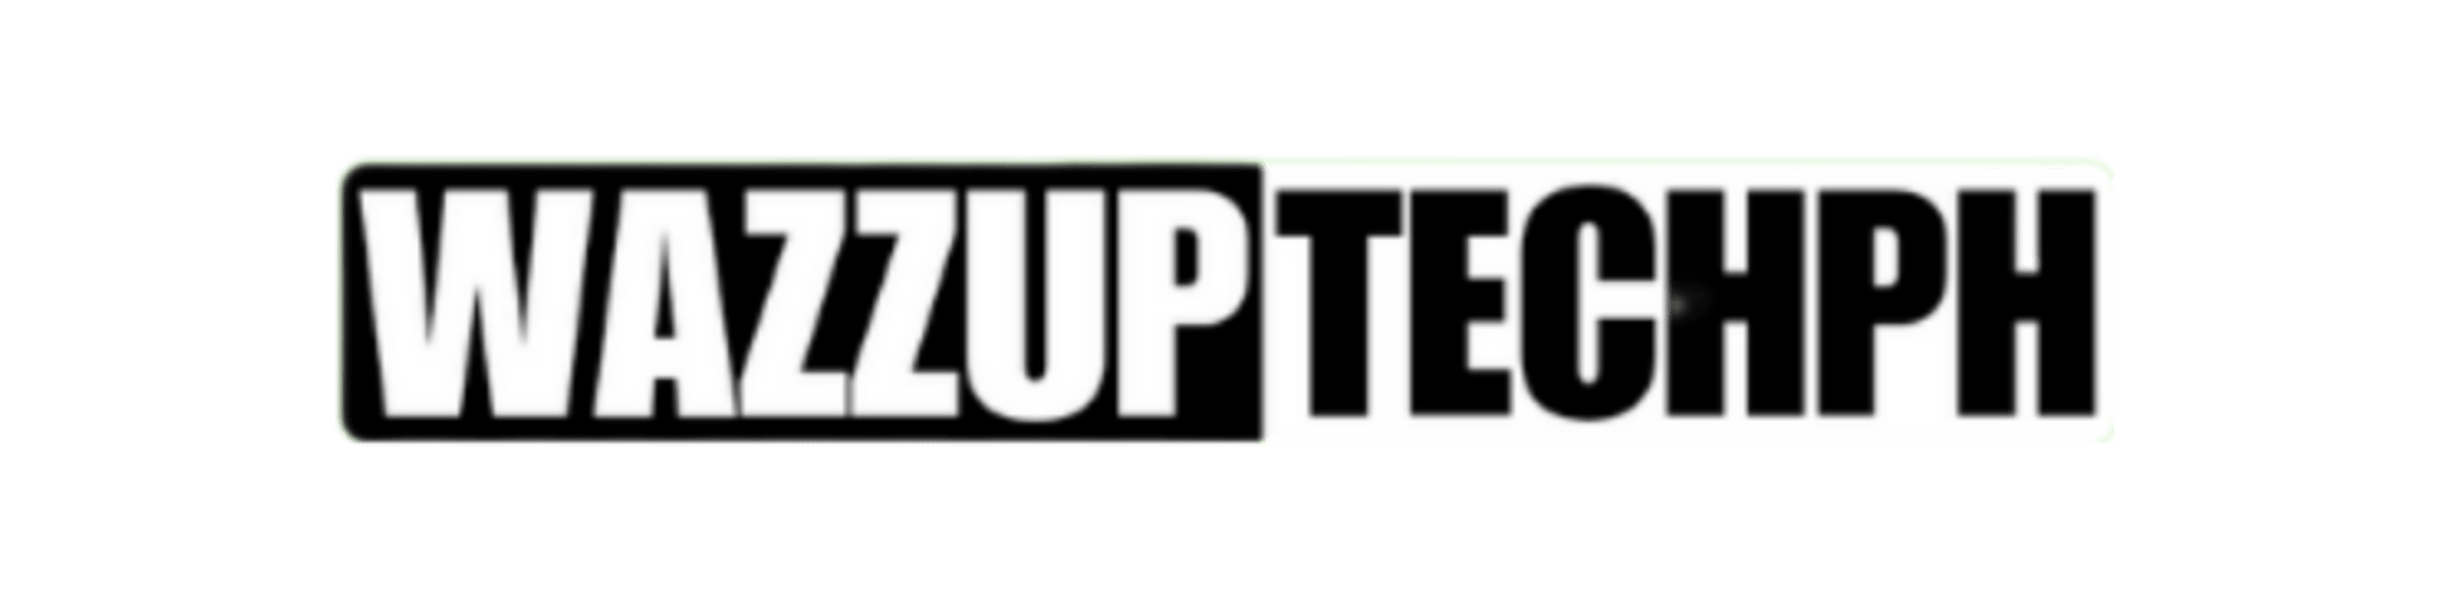 wazzuptechph